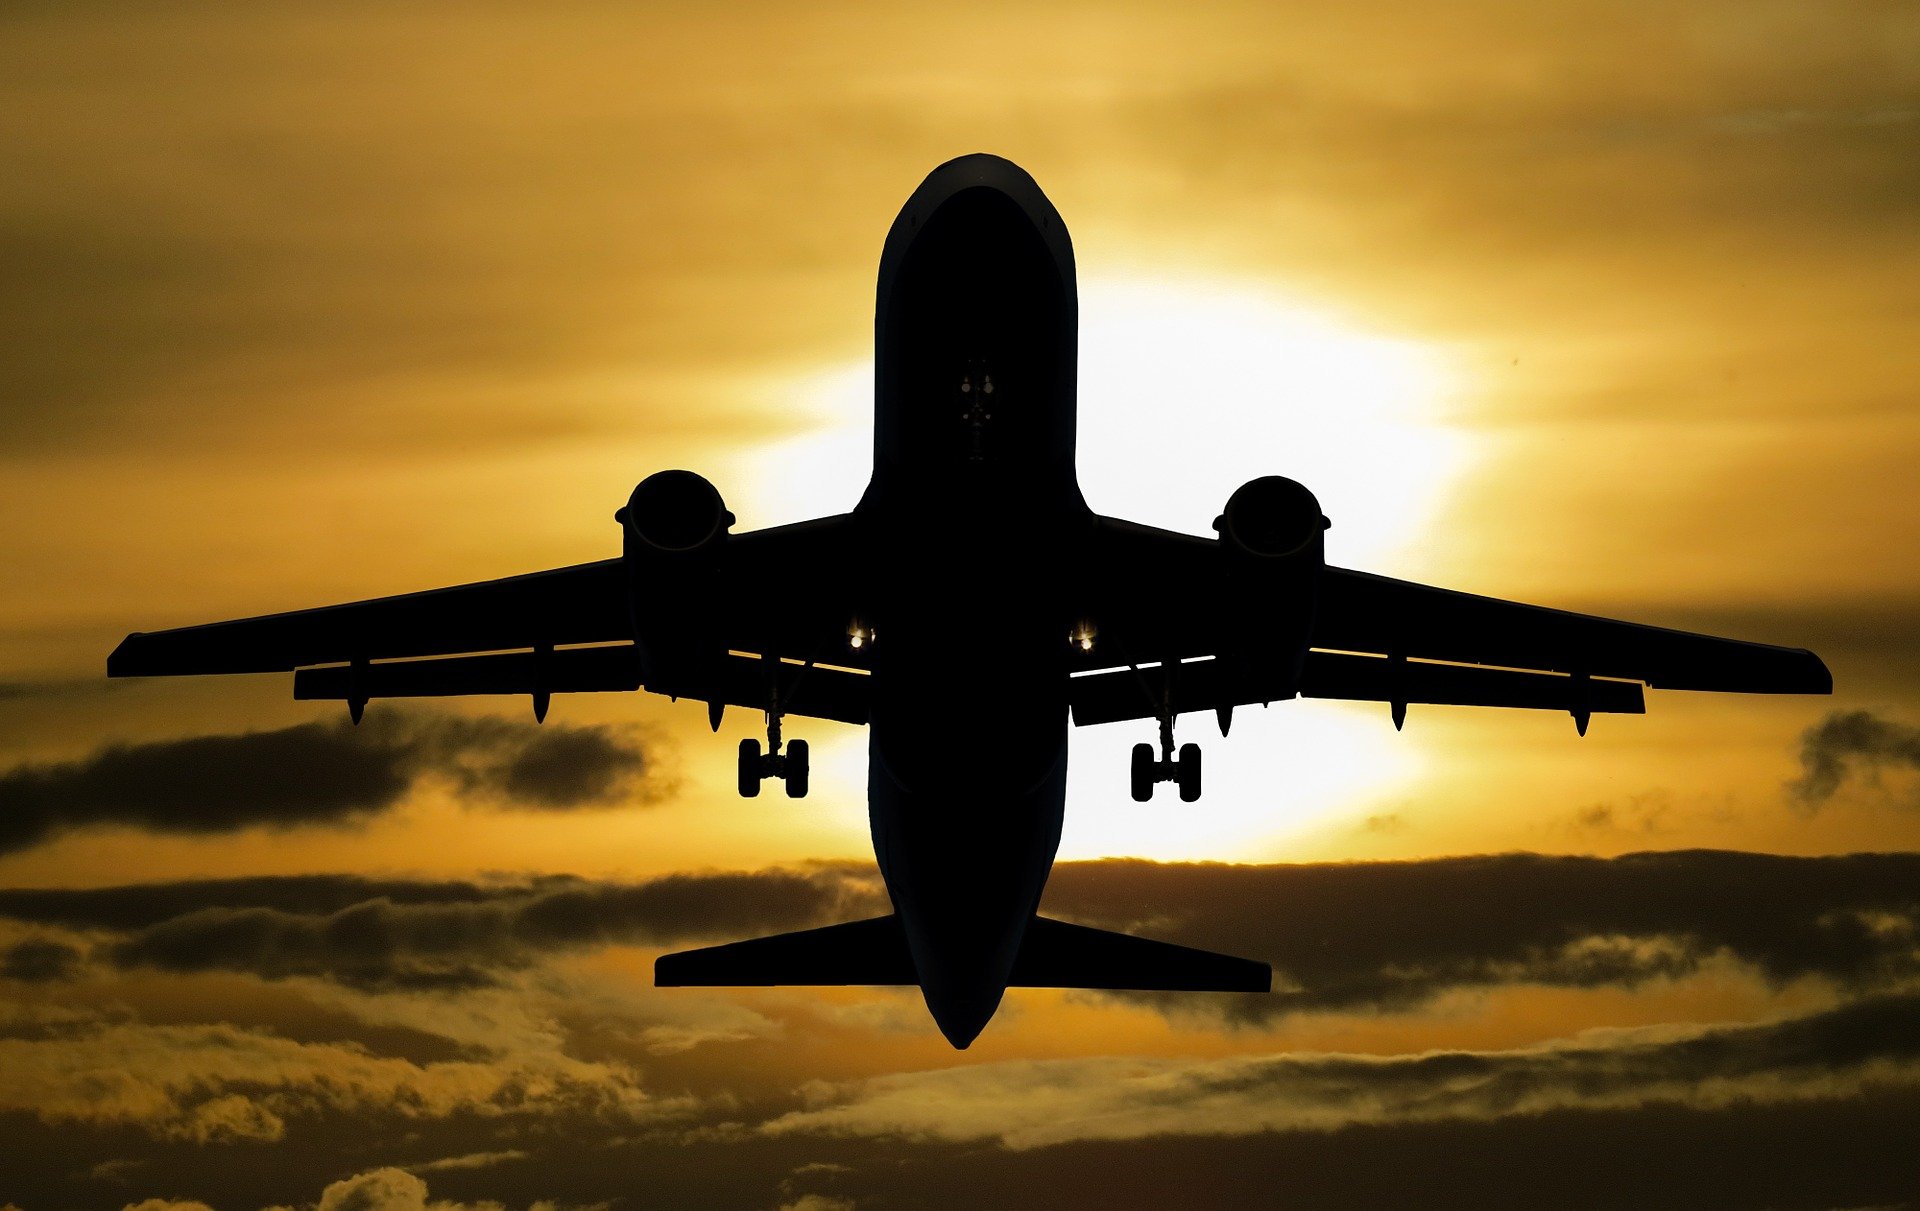 The next joke is all about a plane crash. | Photo: Pixabay/Gerhard G.